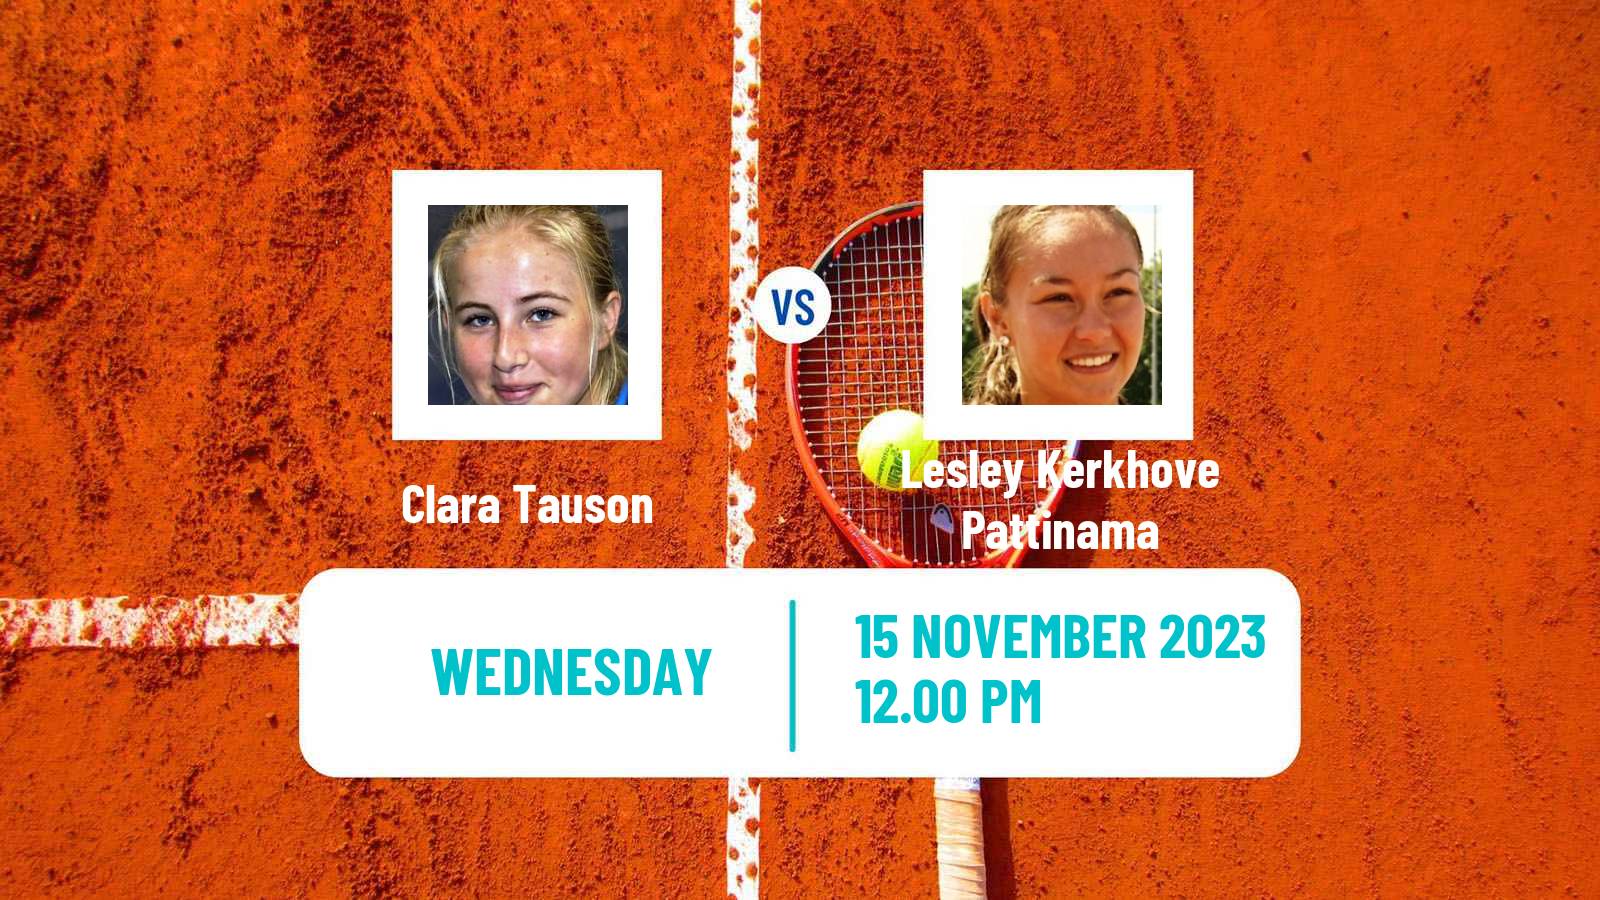 Tennis ITF W40 Petange Women Clara Tauson - Lesley Kerkhove Pattinama